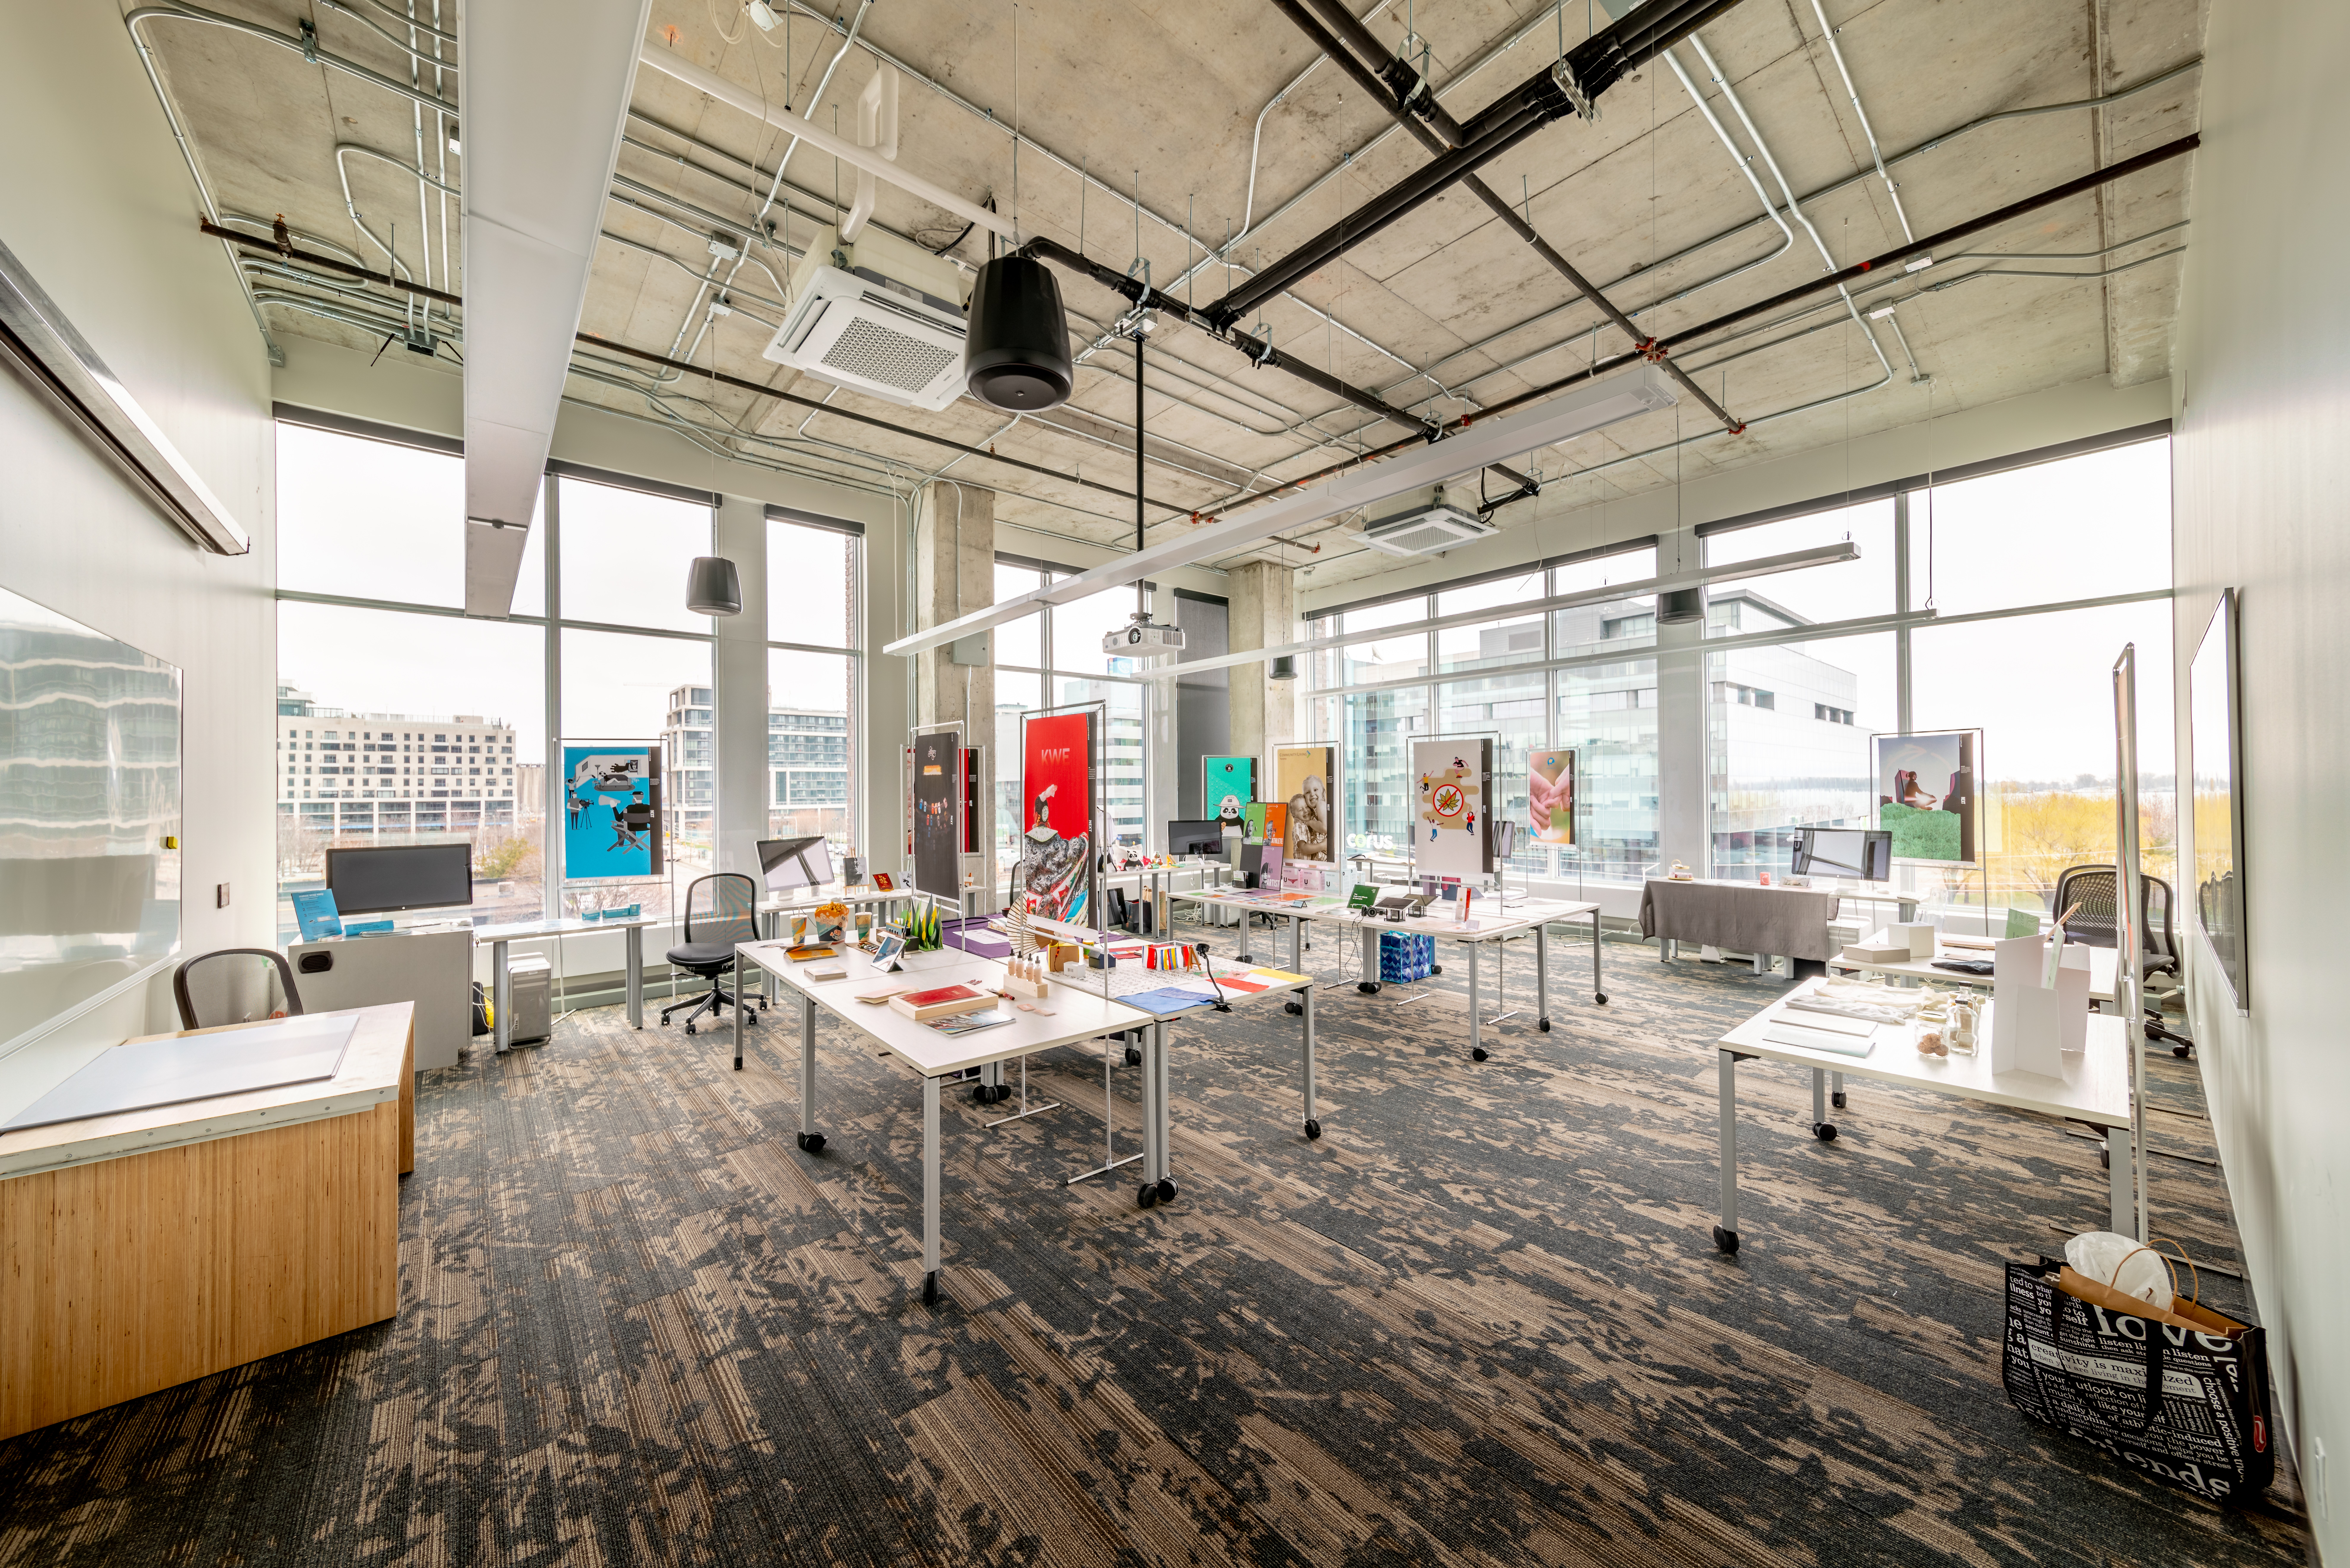 George Brown Opens School Of Design At Daniels Waterfront